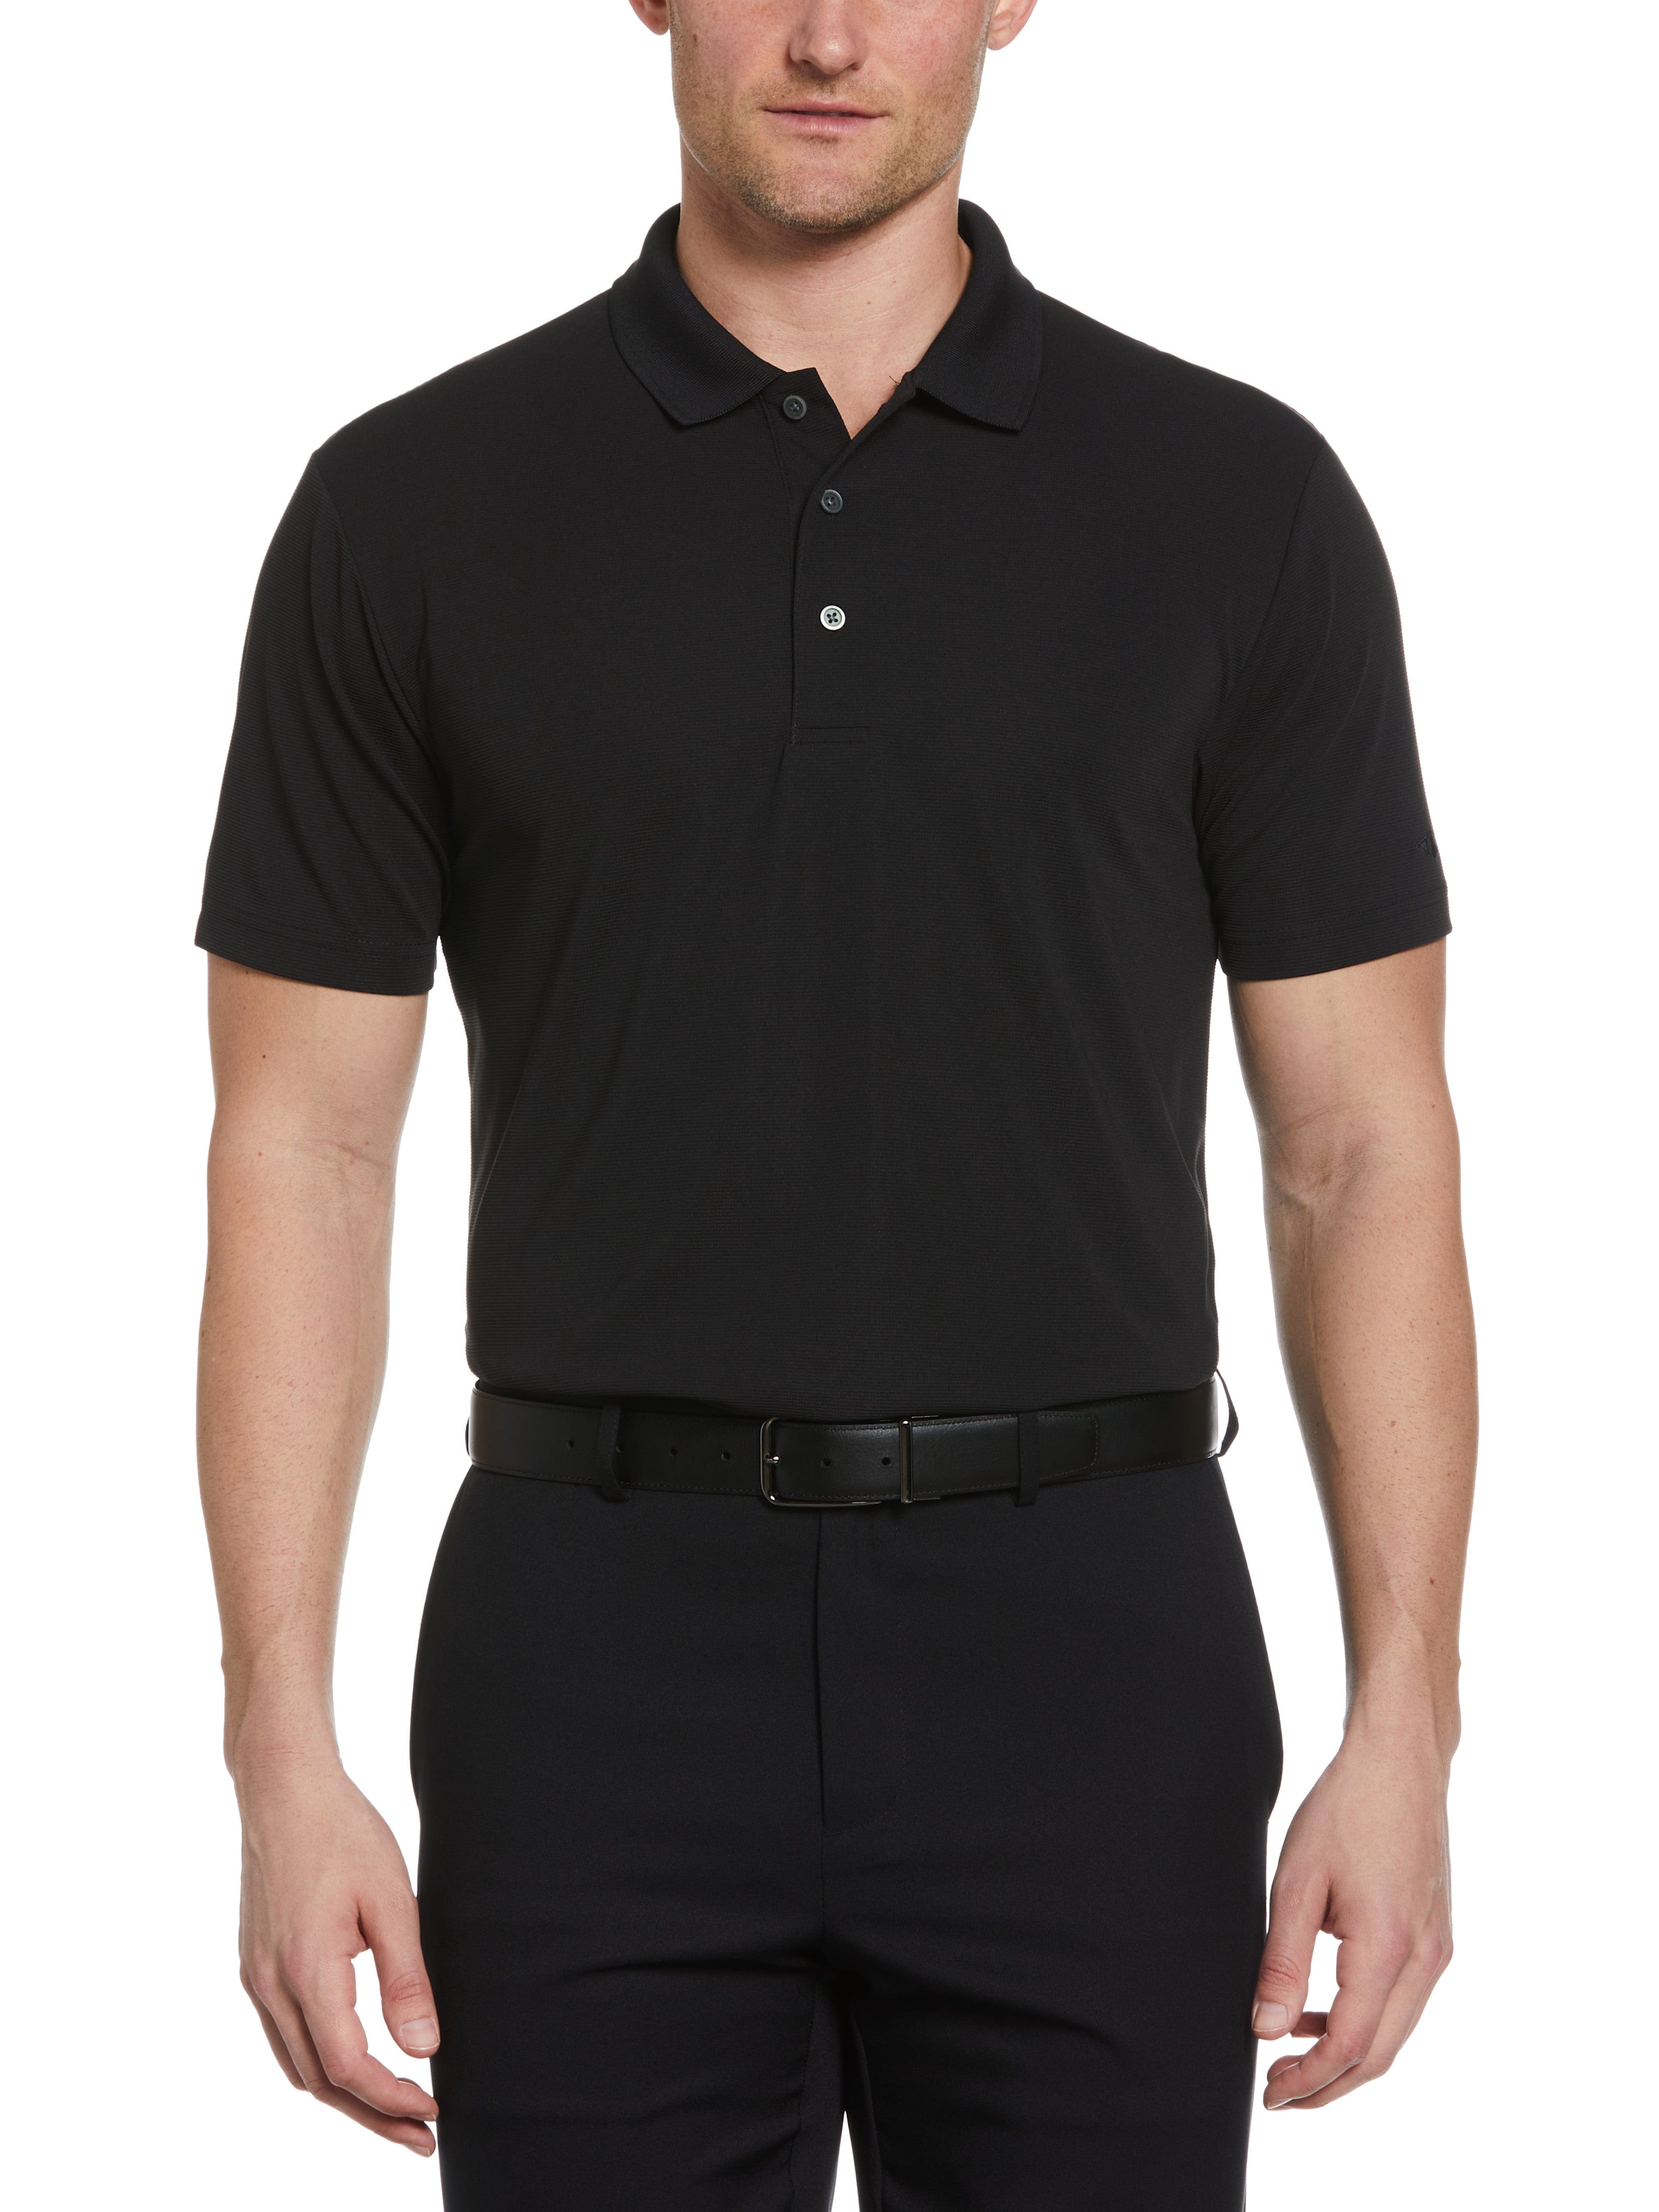 Grand Slam Mens Mini Ottoman Textured Polo Shirt, Size Medium, Black, 100% Polyester | Golf Apparel Shop